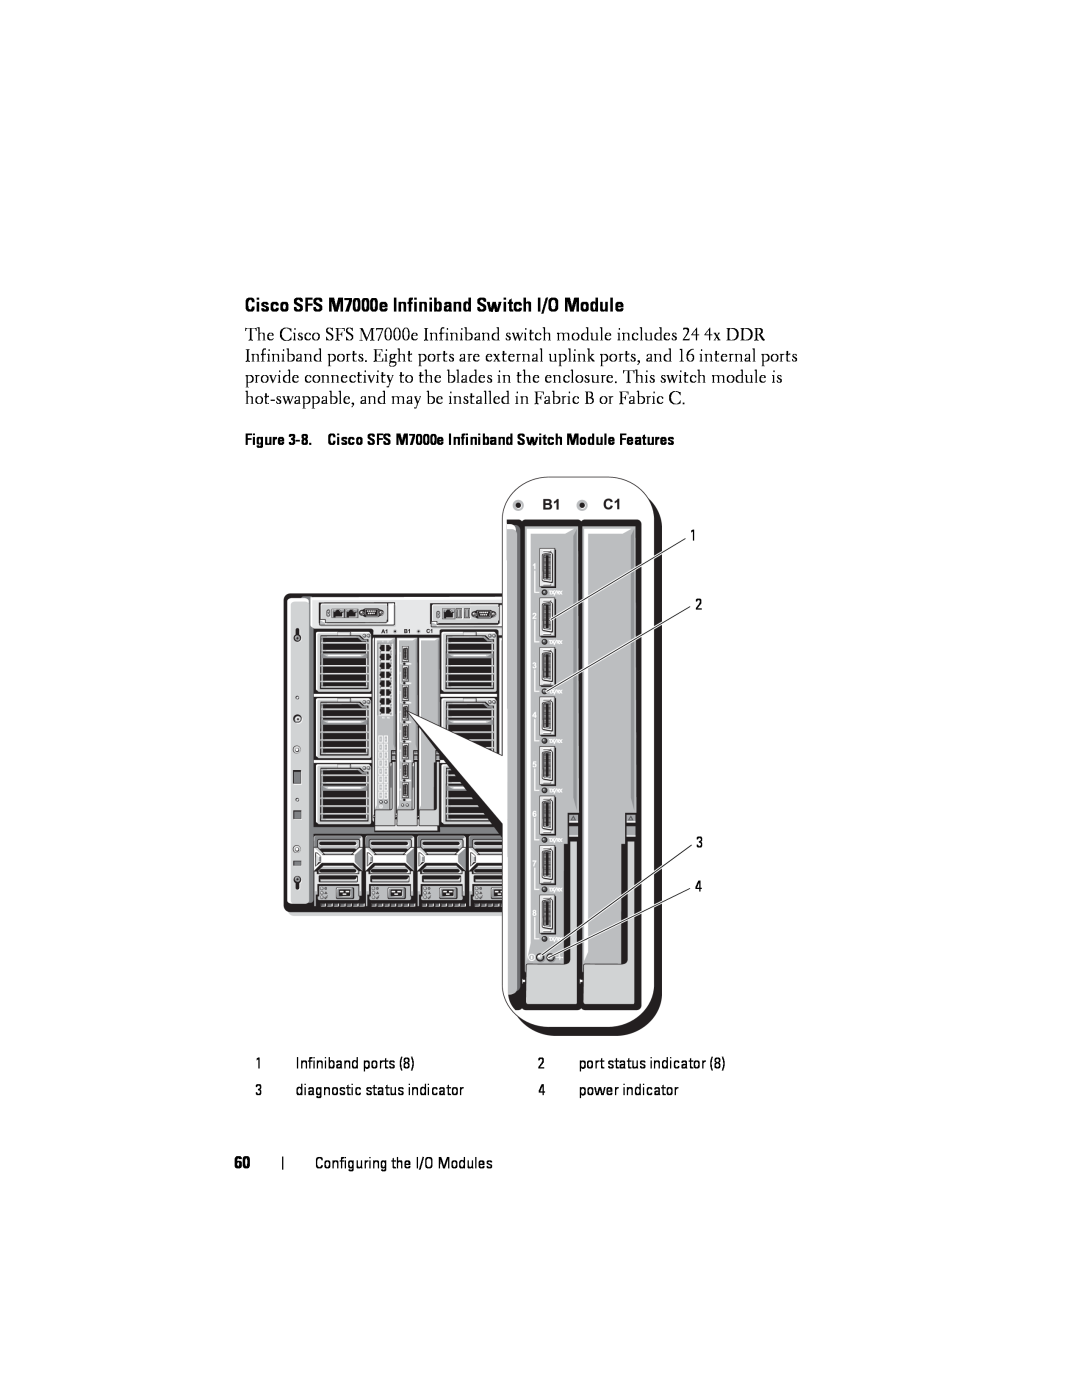 Dell M1000E manual Cisco SFS M7000e Infiniband Switch I/O Module, 8. Cisco SFS M7000e Infiniband Switch Module Features 